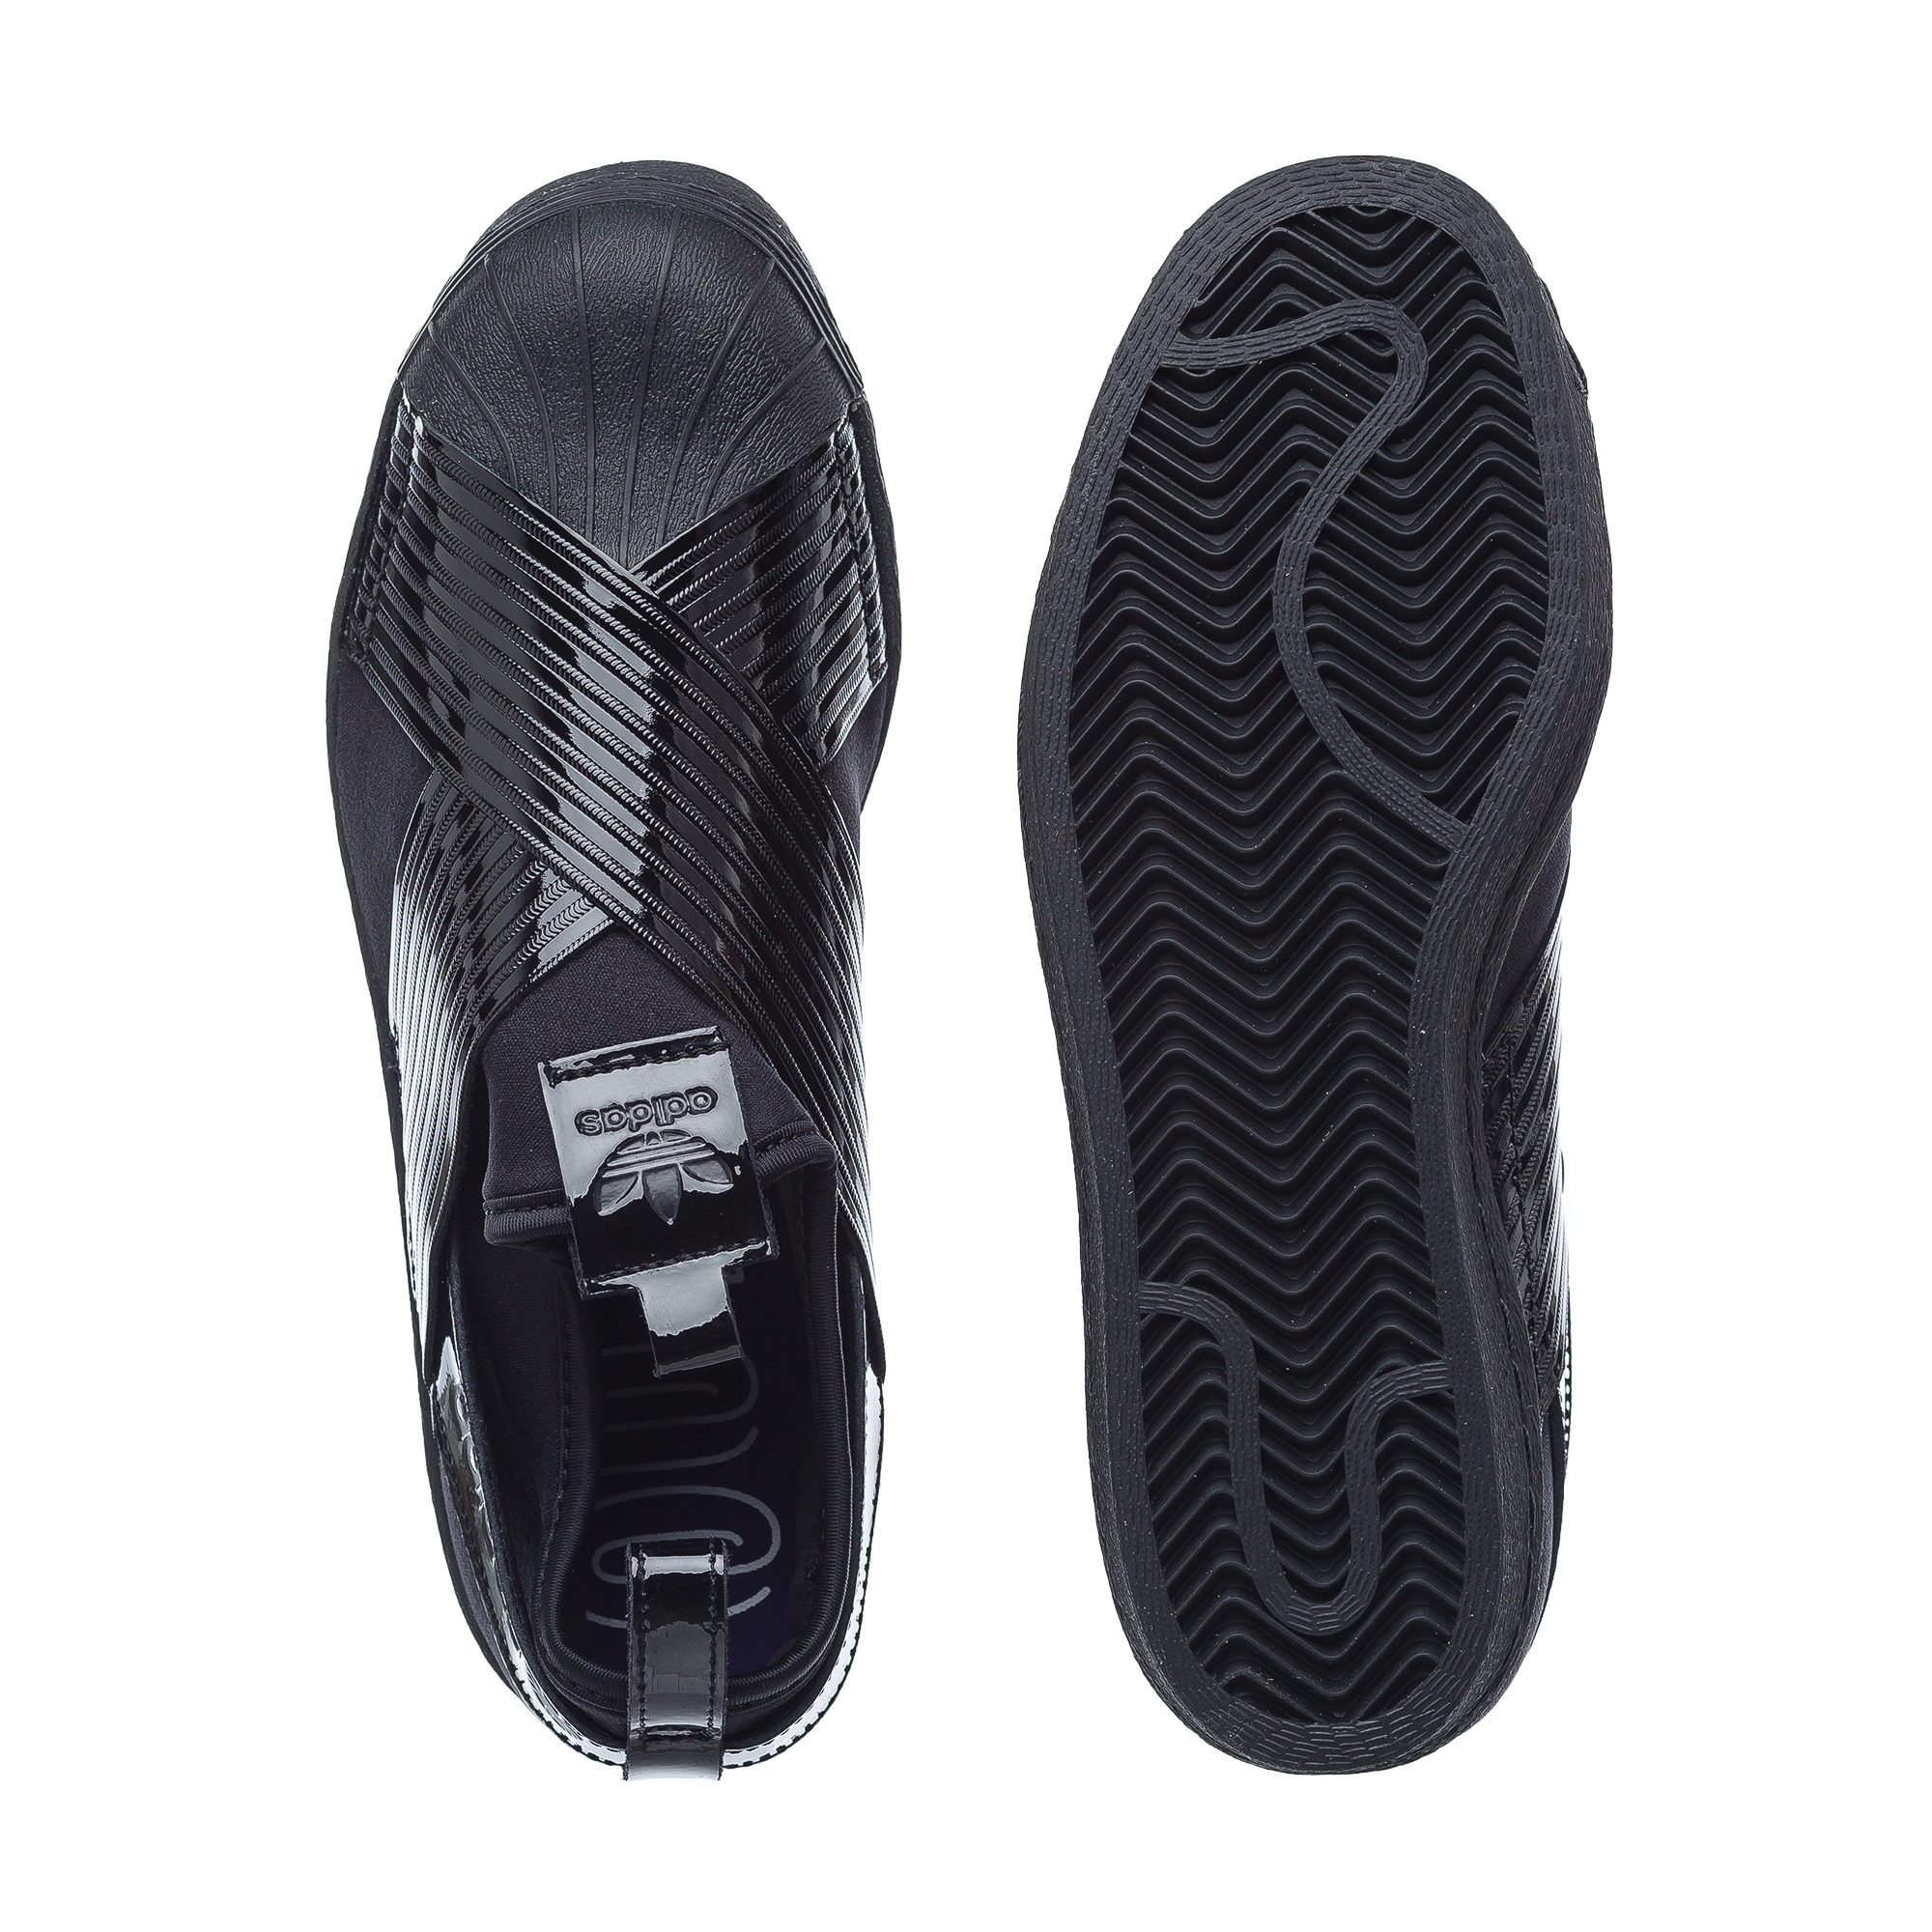 Superstar Slip On Adidas, размер 37, цвет черный ADBD8055 - фото 4